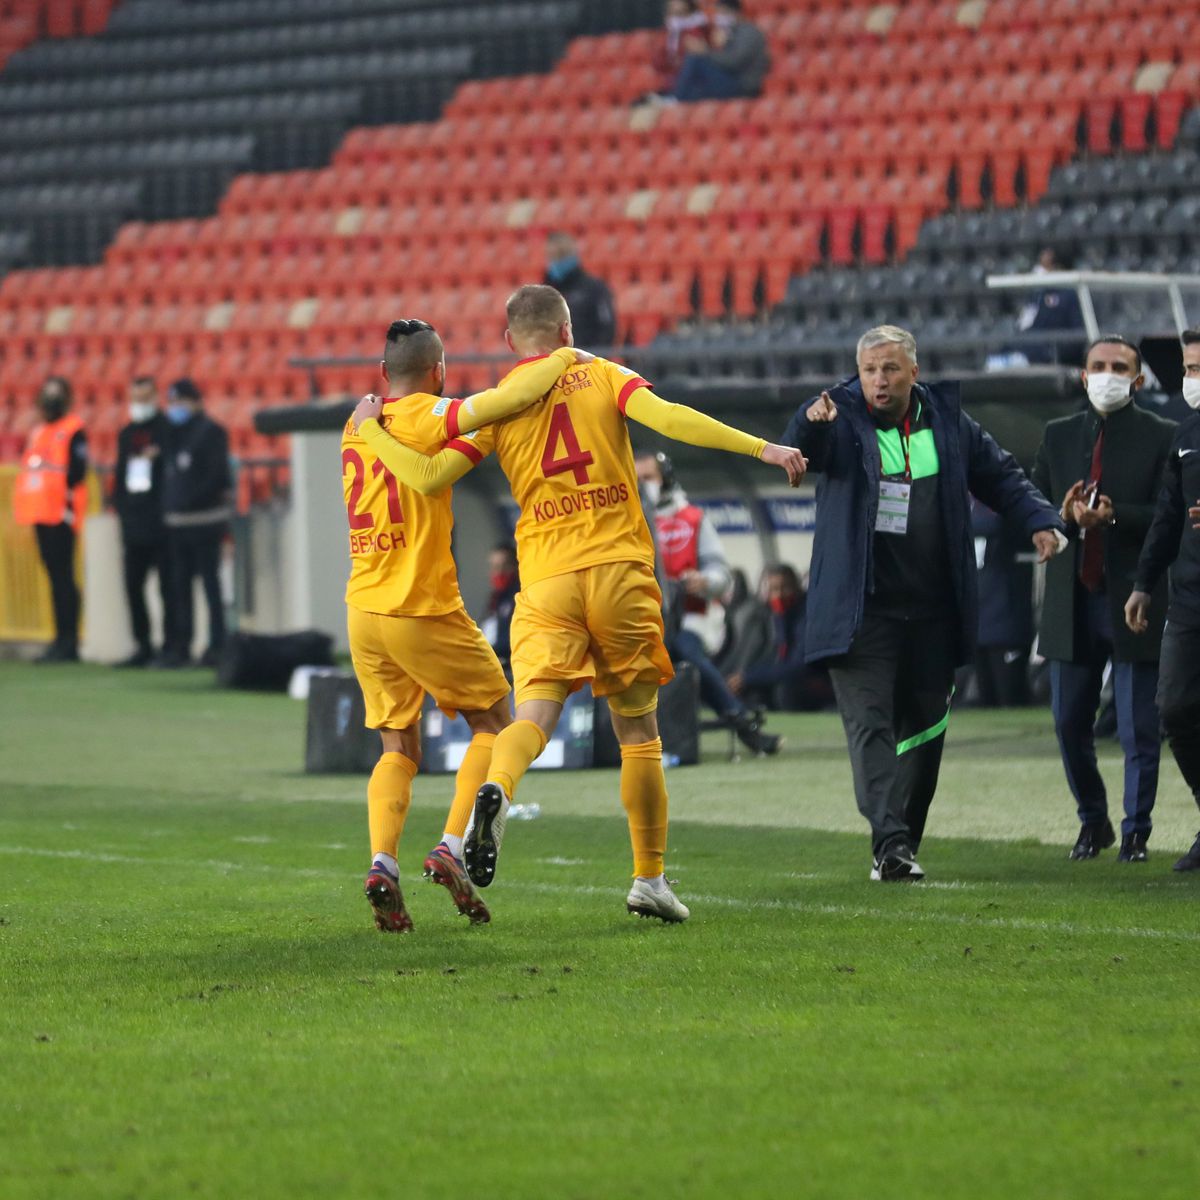 Gaziantep - Kayserispor 2-1 » Dan Petrescu a debutat cu o înfrângere! Alexandru Maxim a marcat golul decisiv